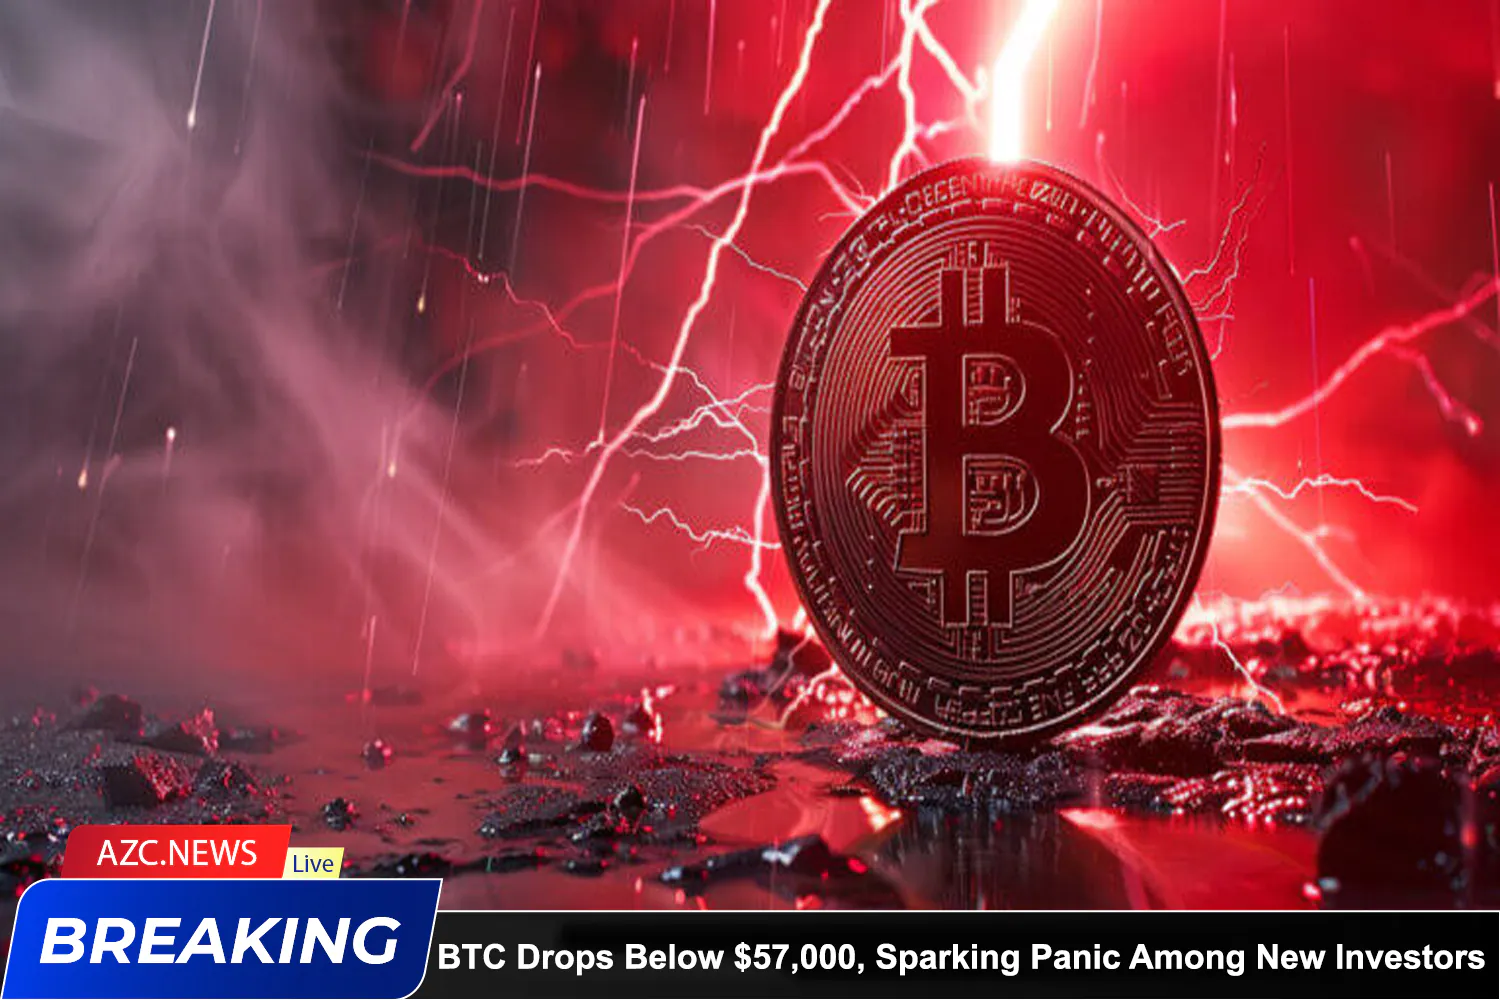 Azcnews Bitcoin Drops Below $57,000, Sparking Panic Among New Investors